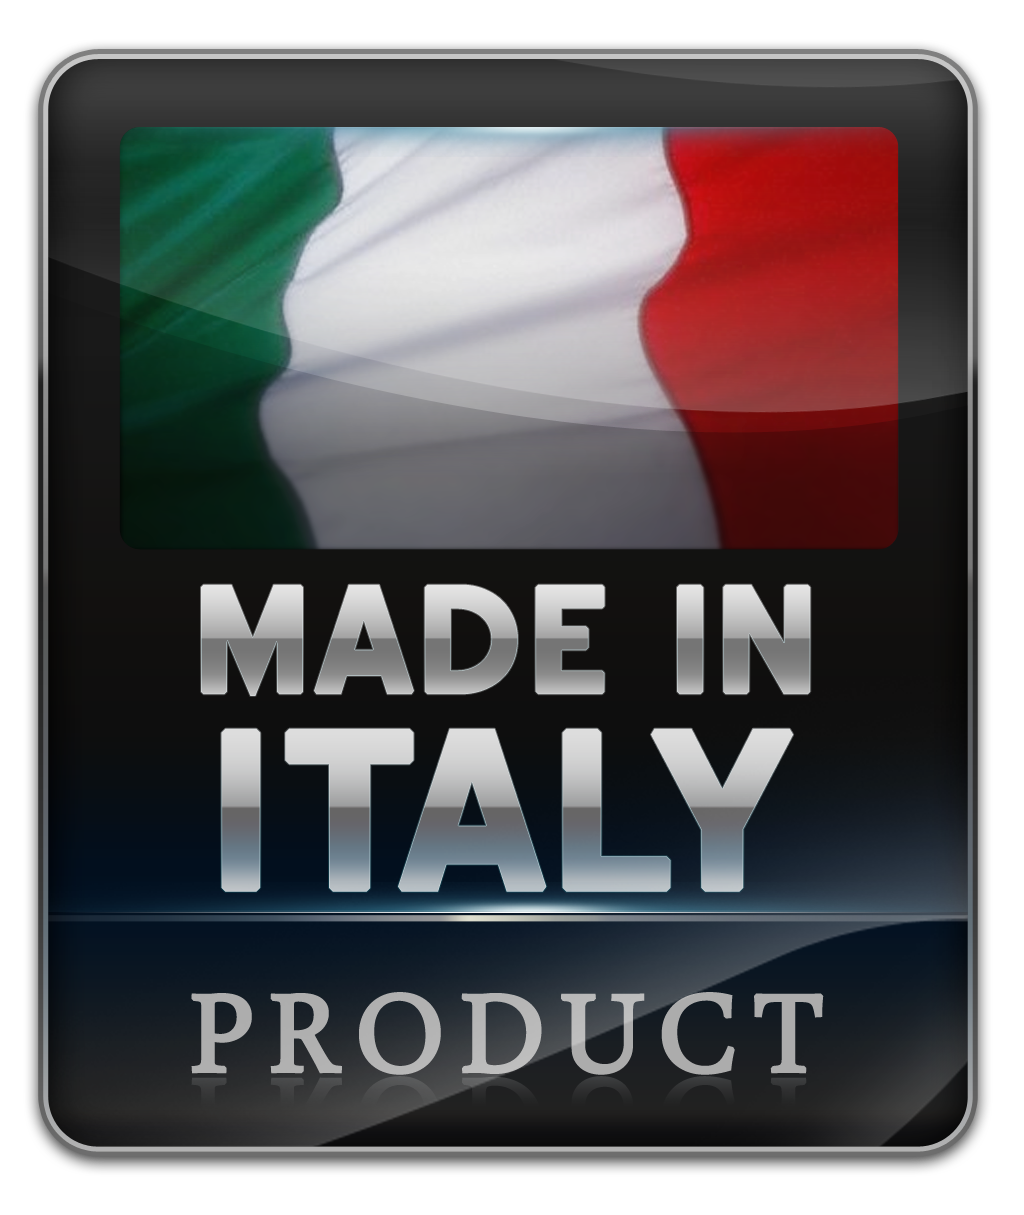 http://1.bp.blogspot.com/_T6YFsoZQGBs/TNVSXTZAQiI/AAAAAAAAAmE/U8YtfmnOVJc/s1600/Made_In_Italy_Product_Logo_by_Steel89.png